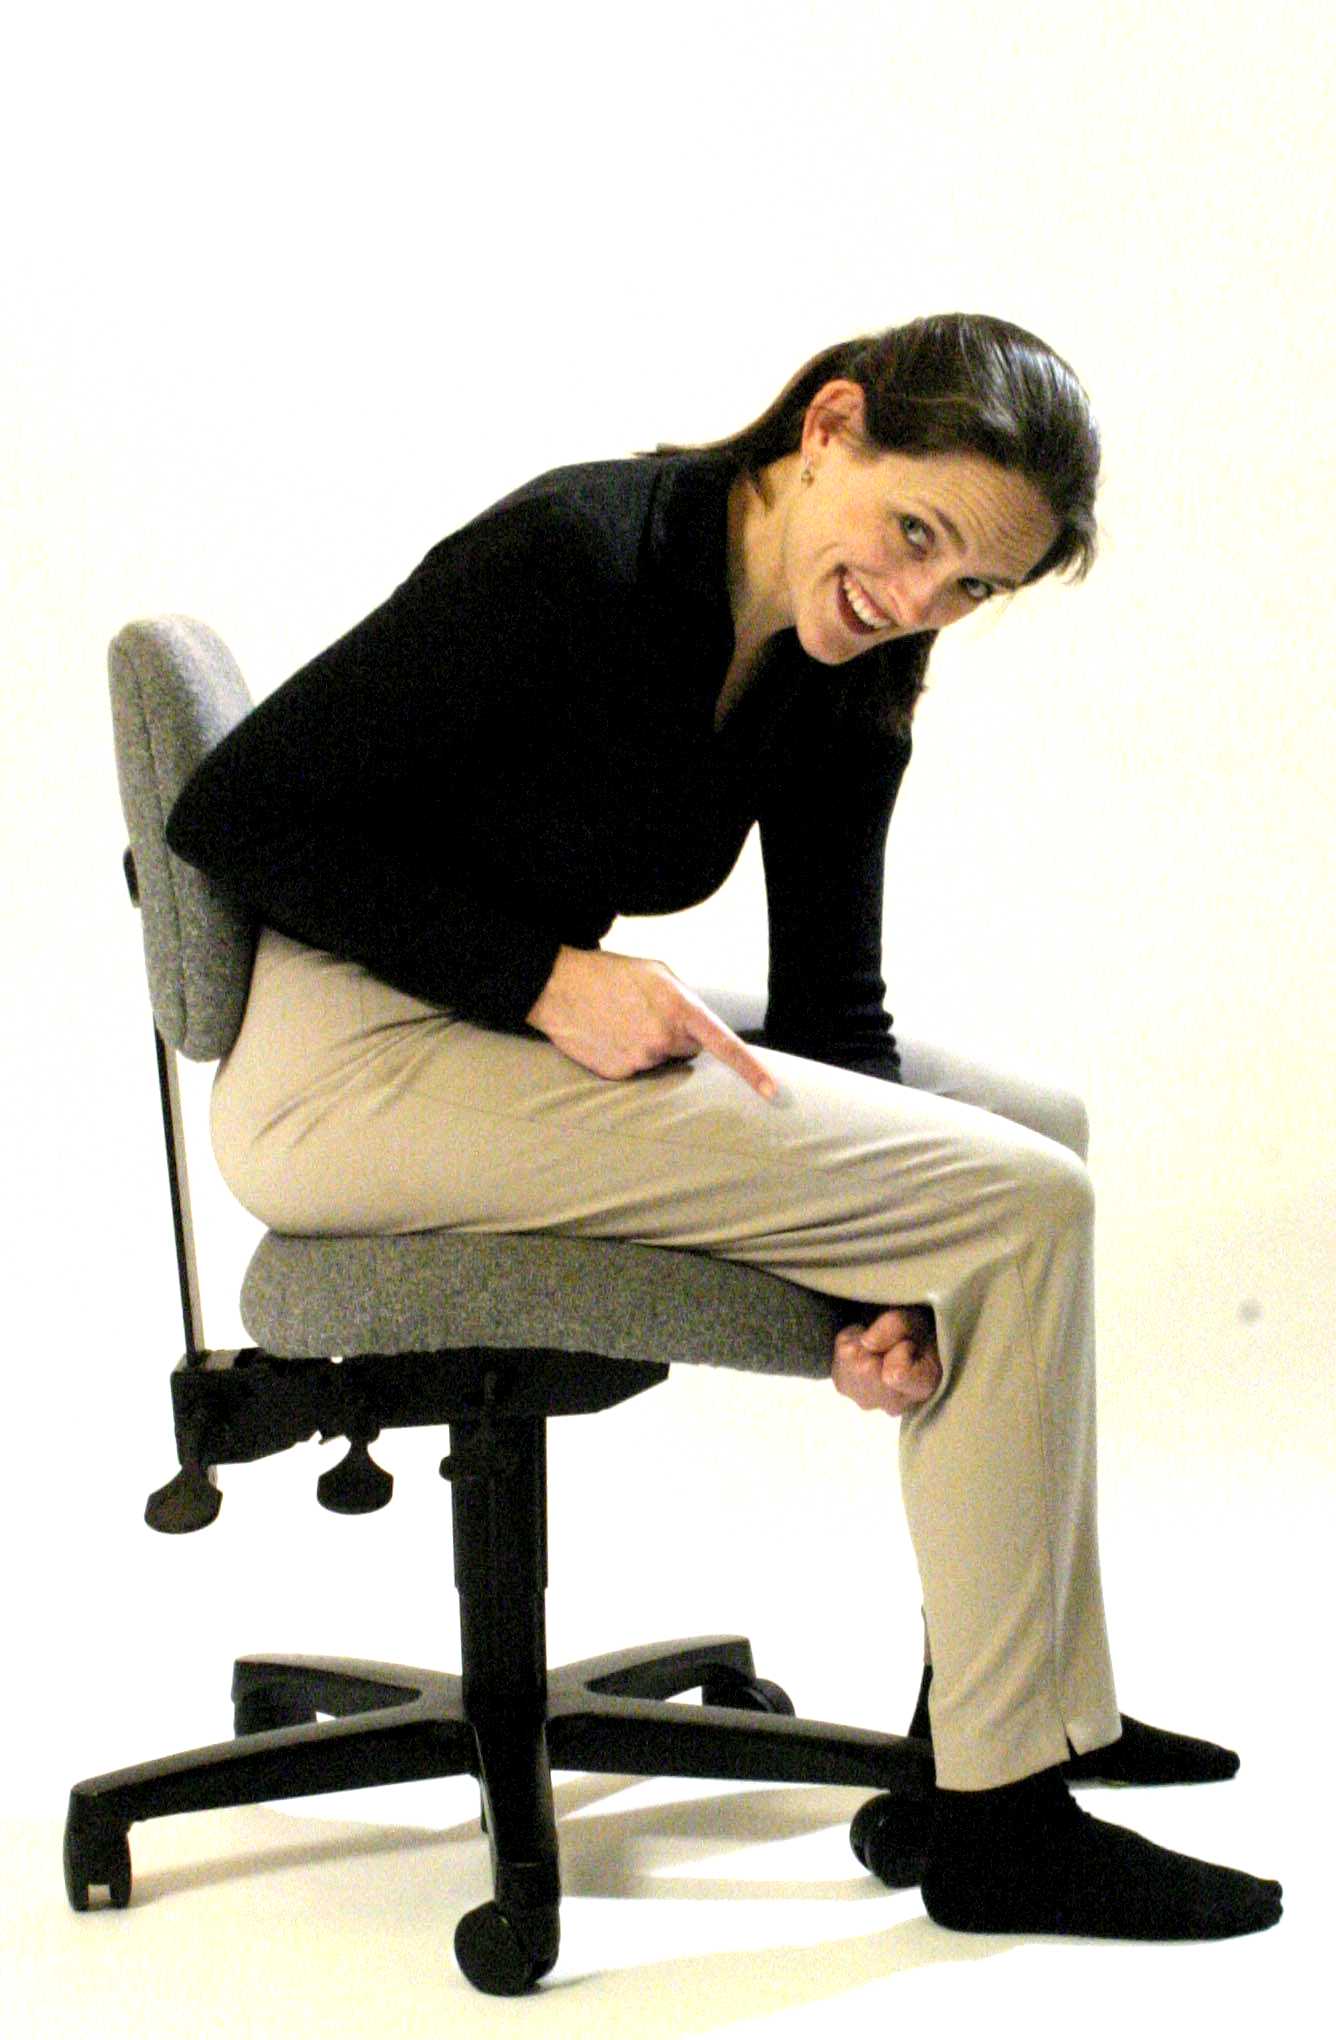 Hilary Bryan demonstrates safe seatpan alignment